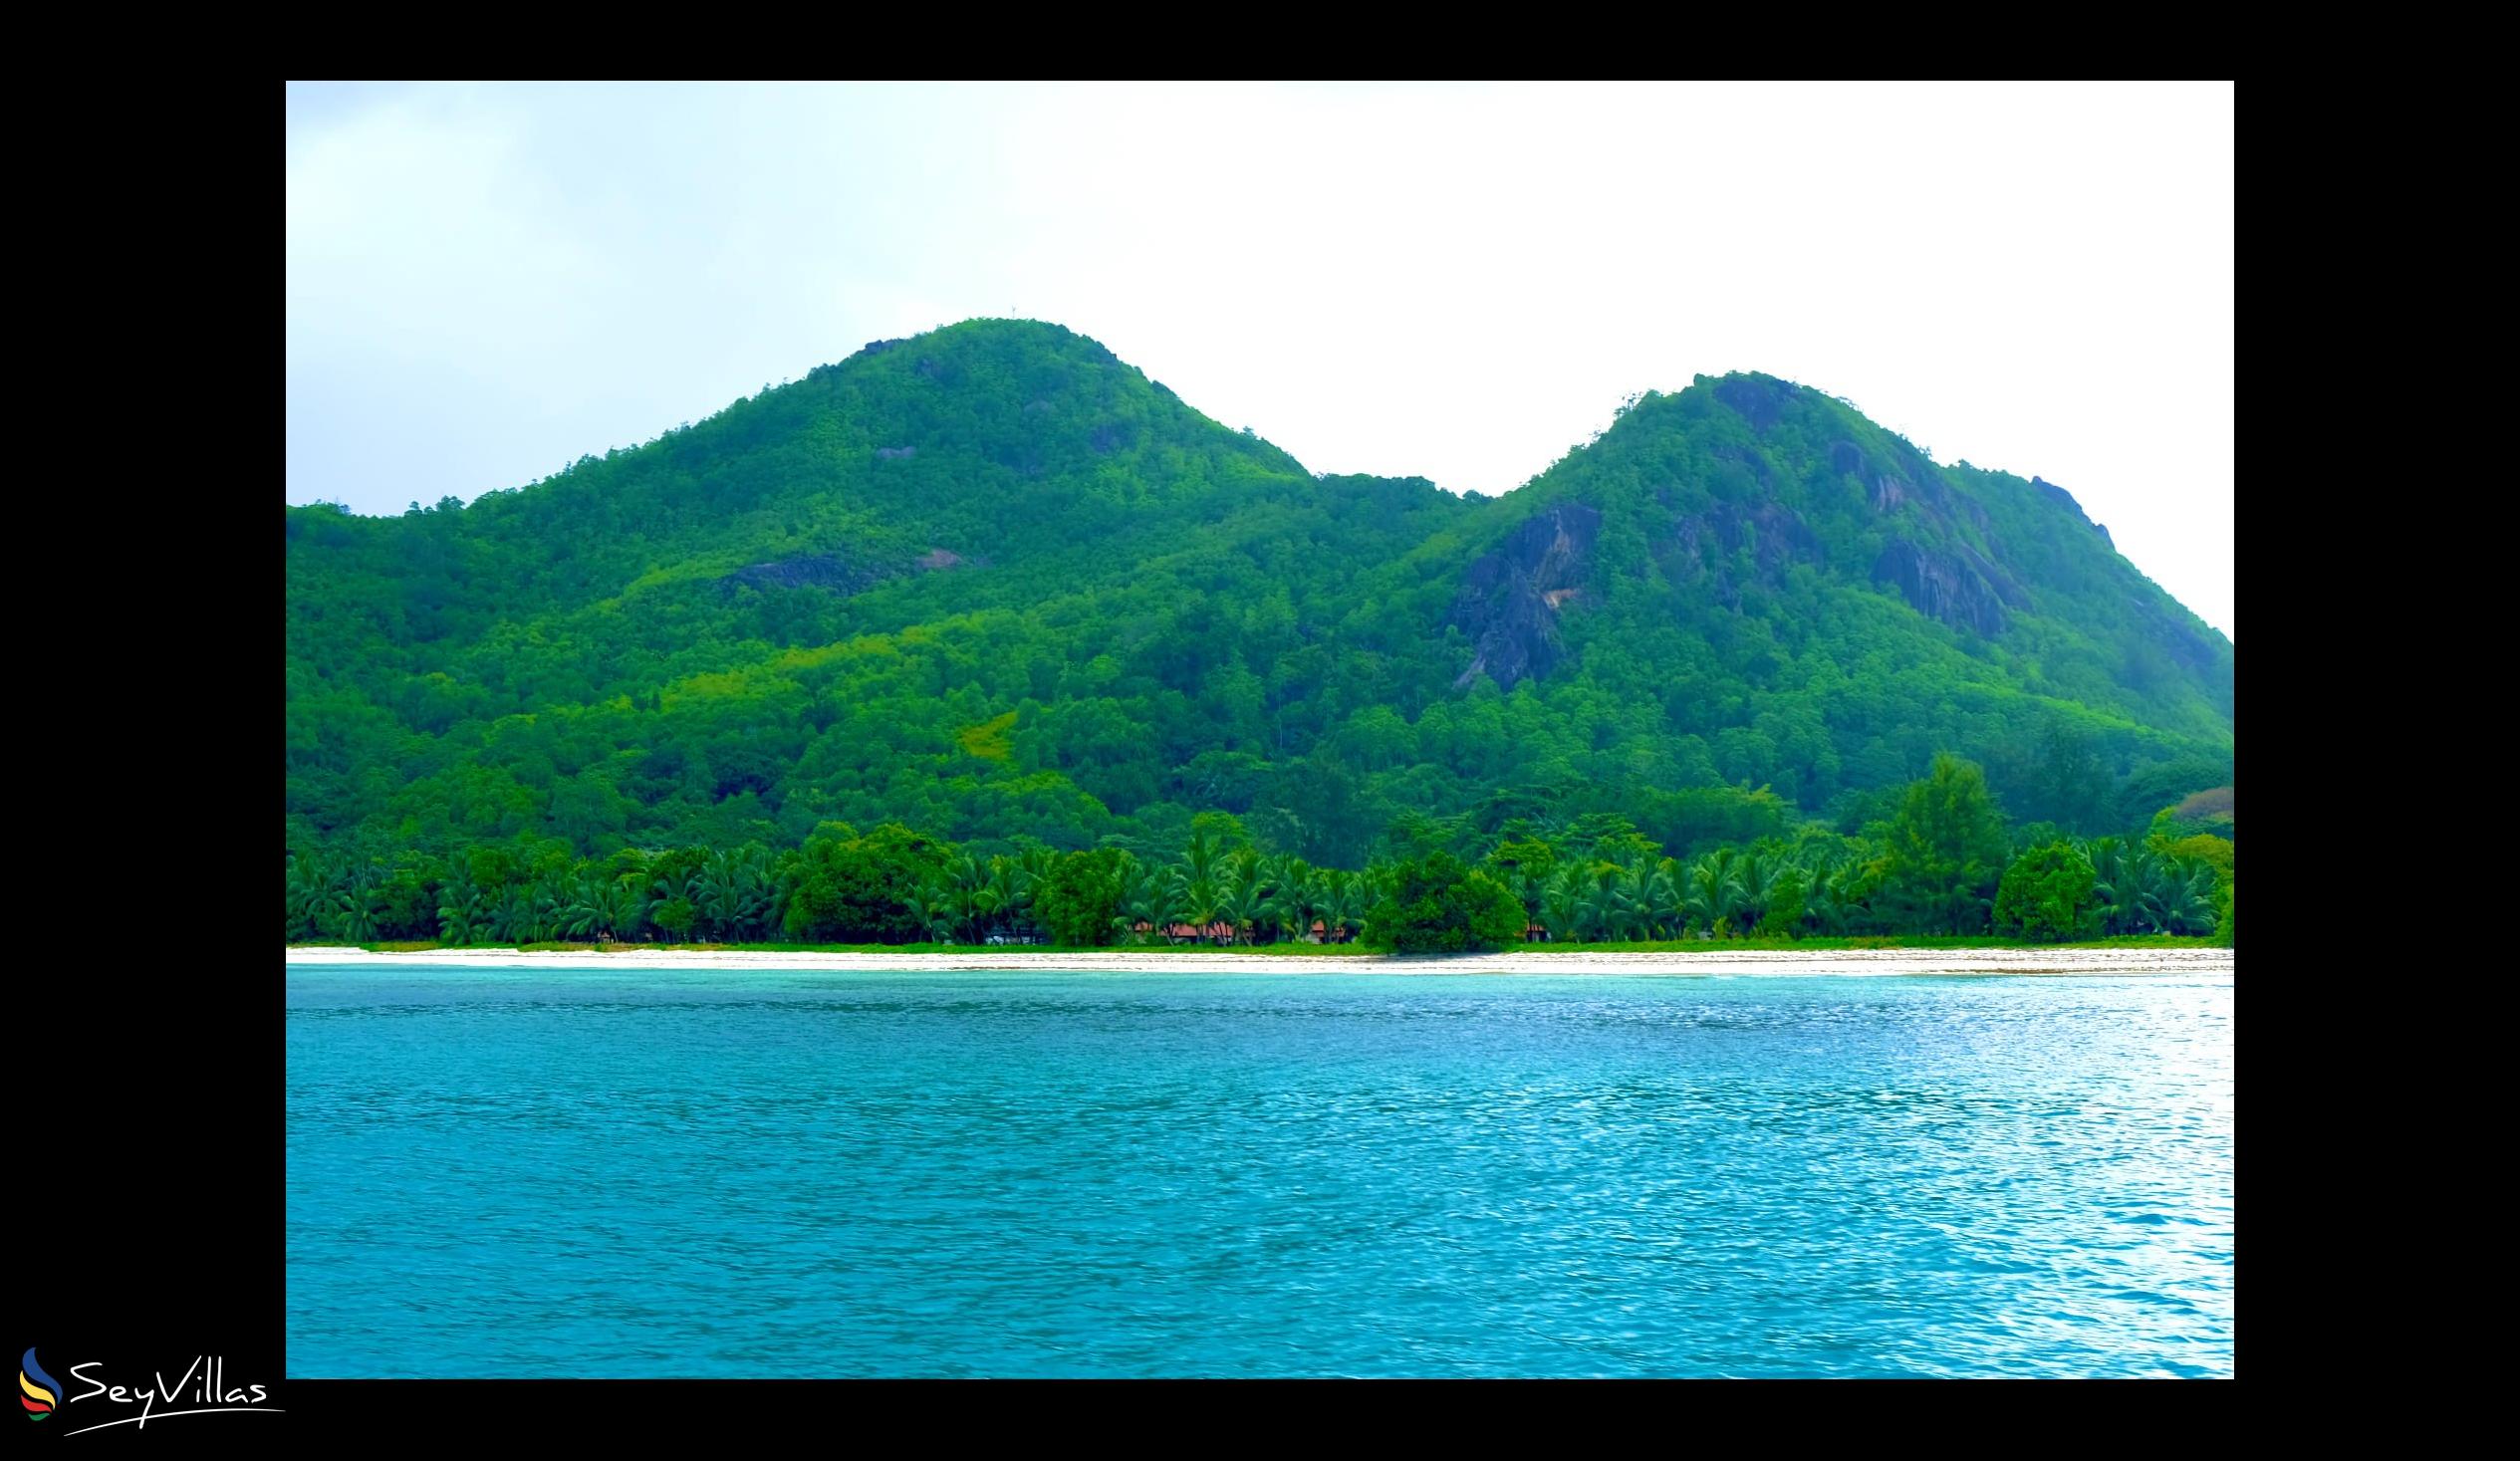 Photo 2: Club Med Seychelles - Location - Saint Anne (Seychelles)